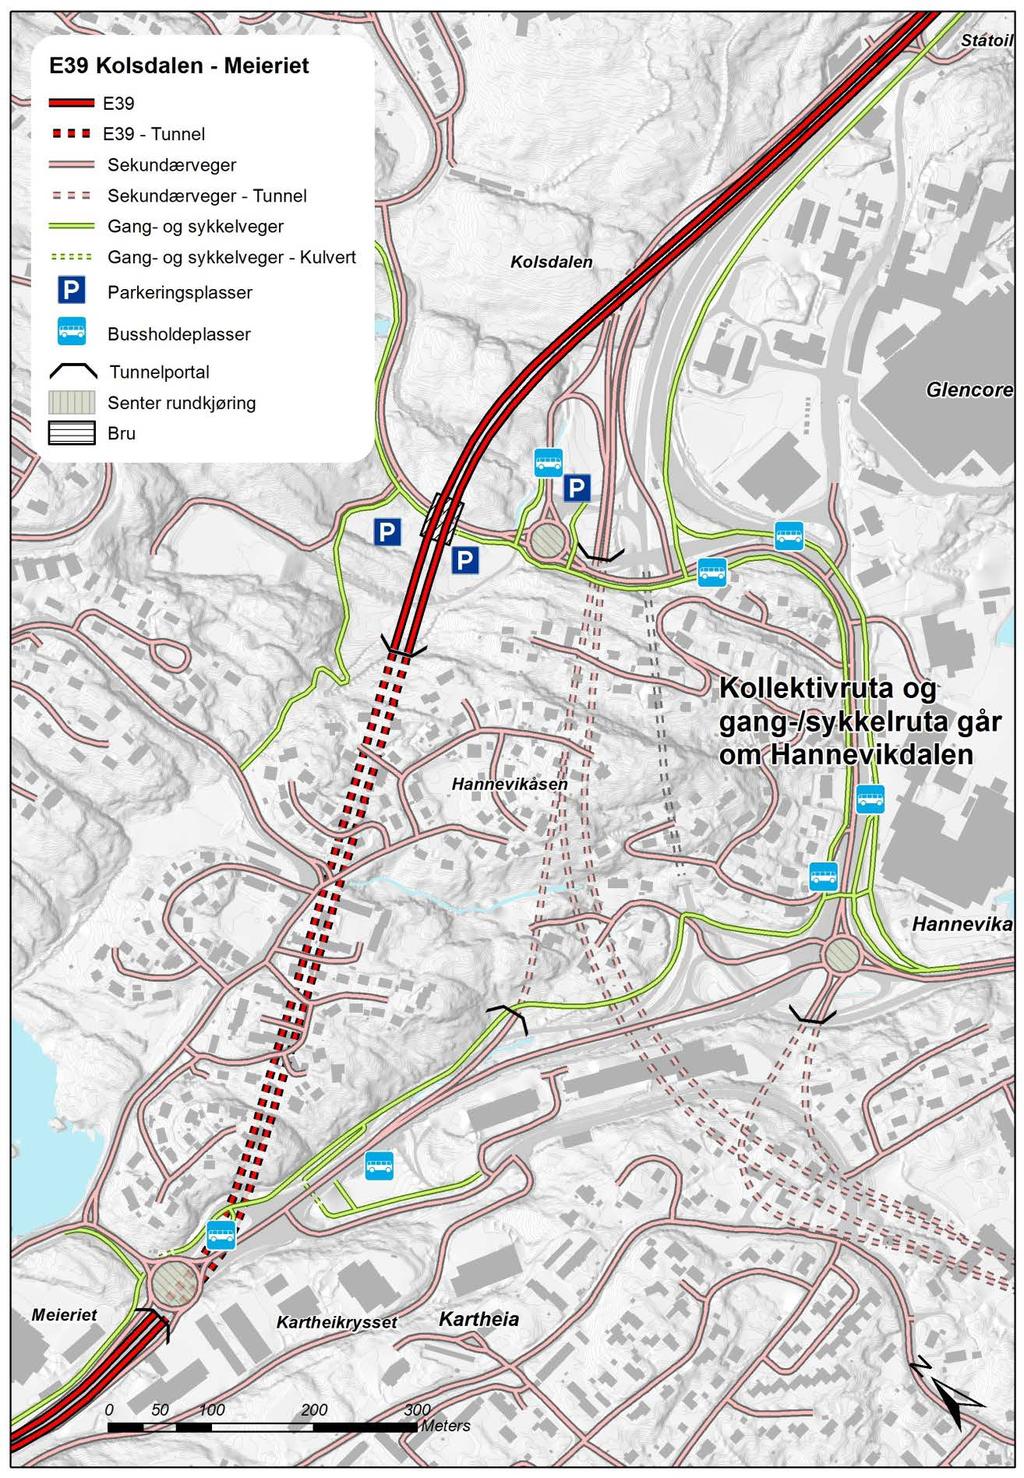 E39 Kolsdalen - Meieriet Utforming av ny 4-feltstunnel på strekningen